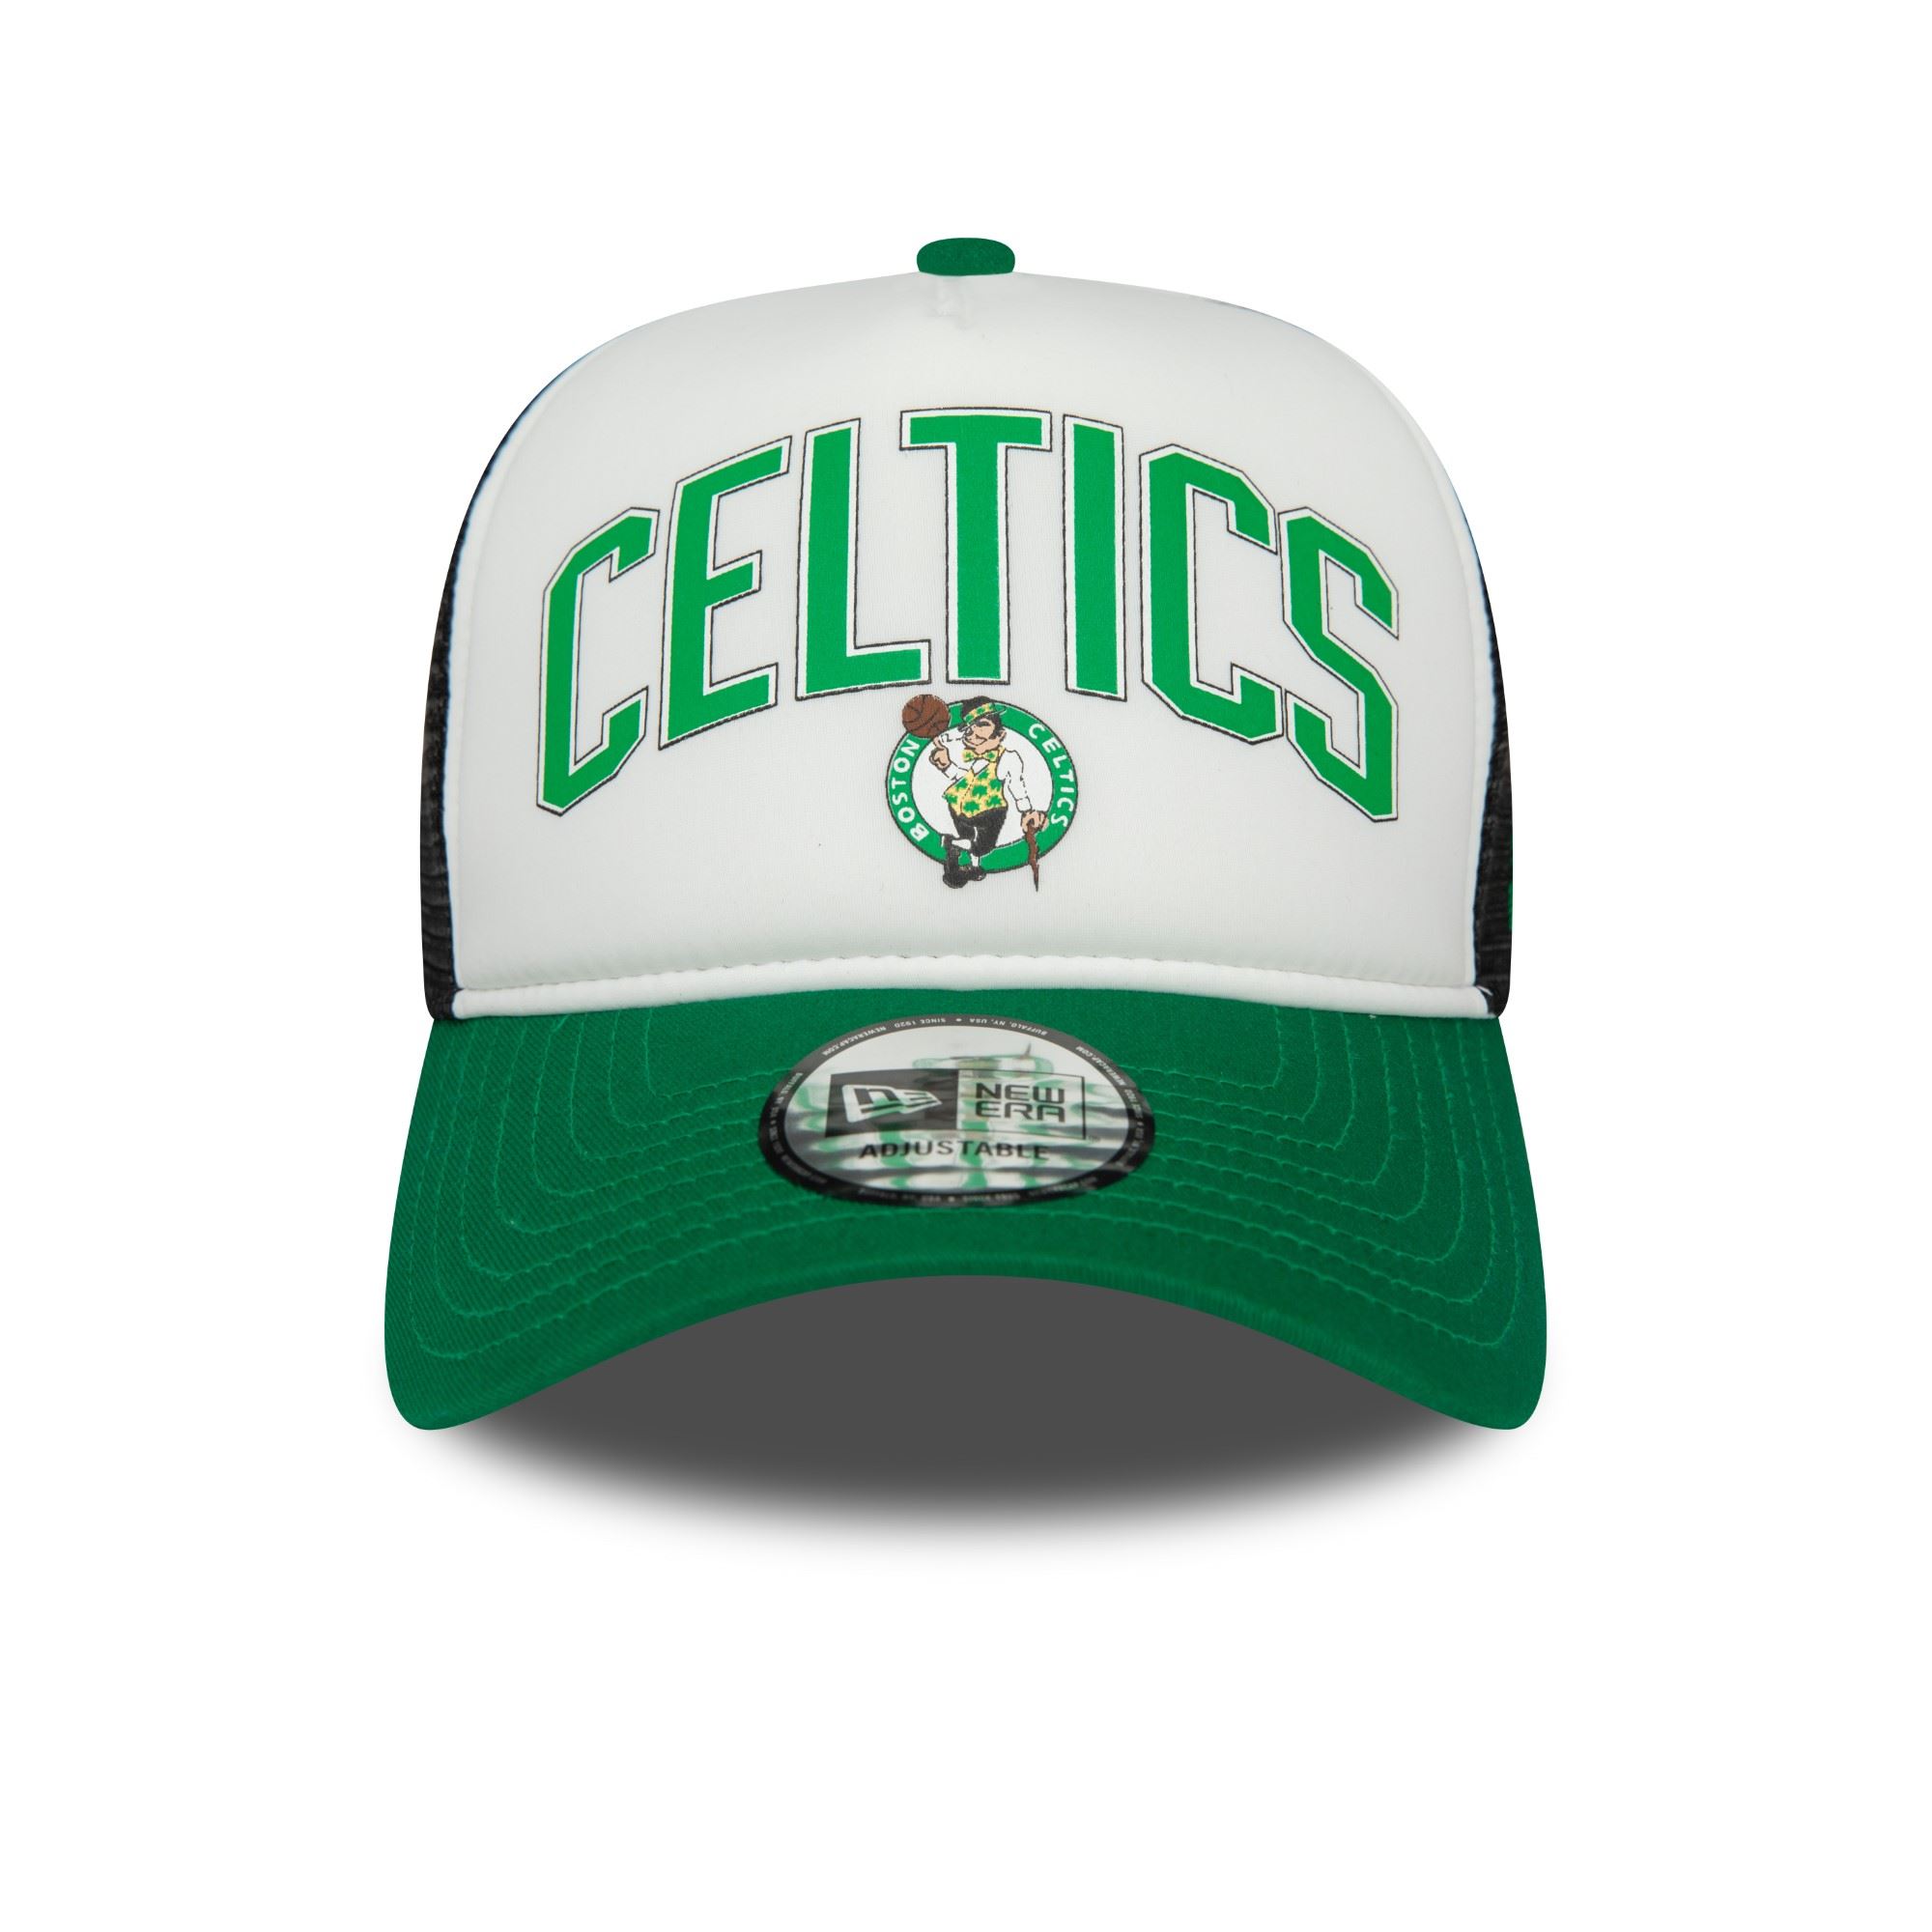 Boston Celtics NBA Retro White Black Green A-Frame Adjustable Trucker Cap New Era